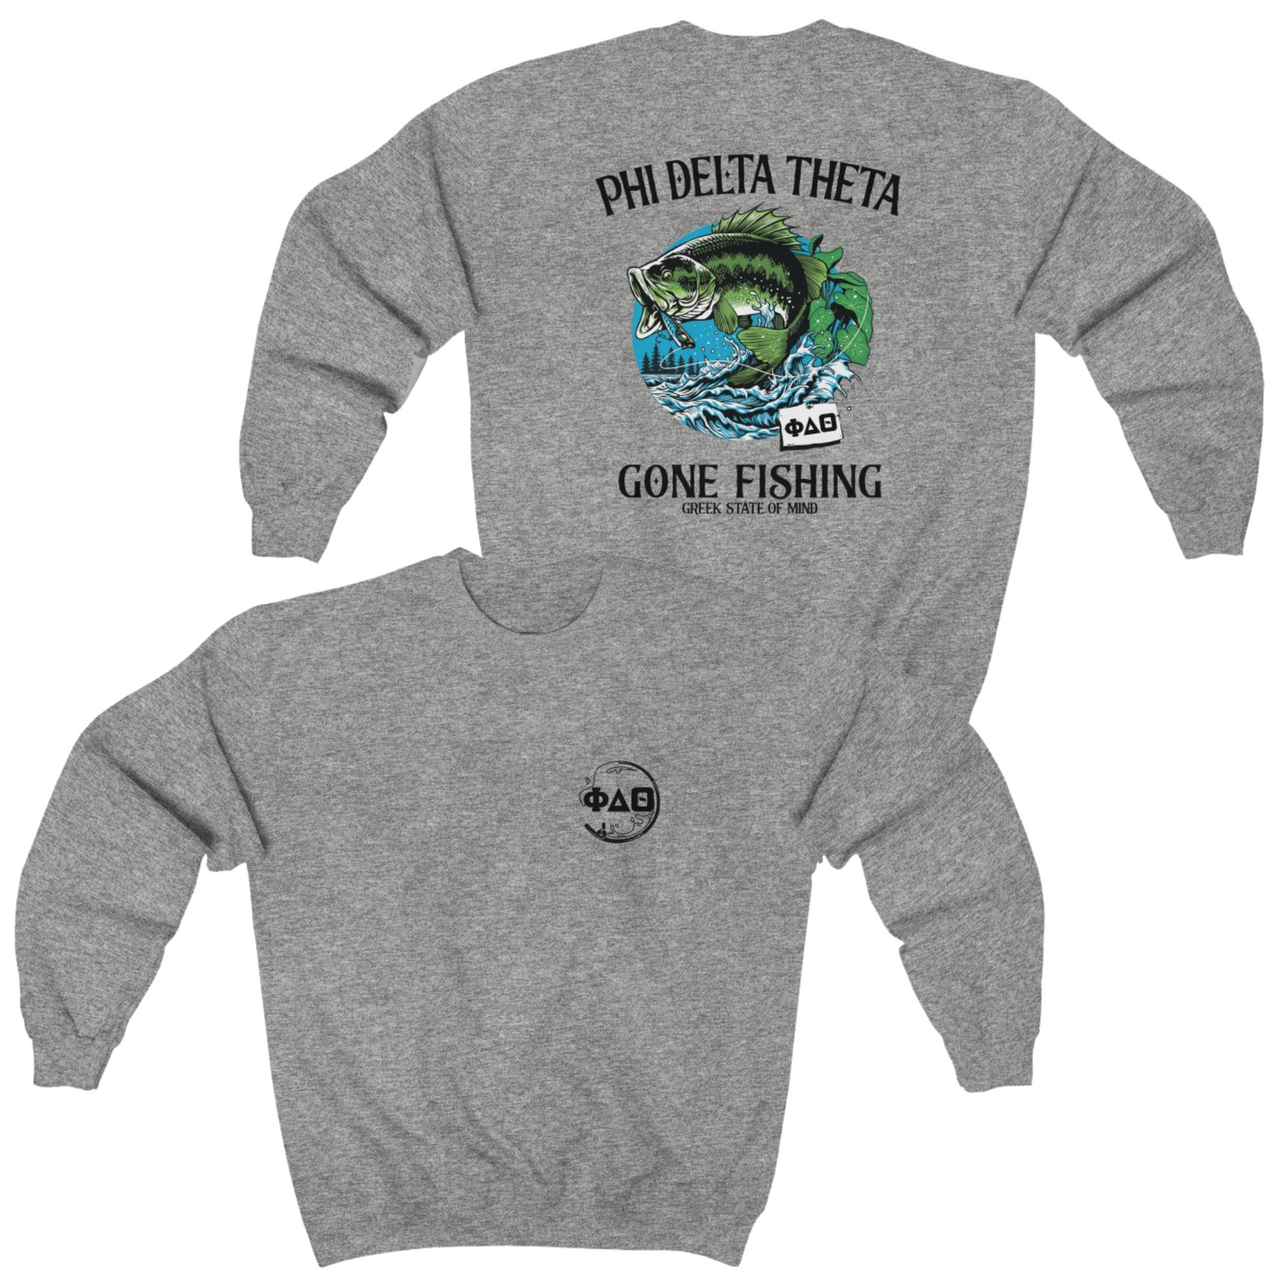 Grey Phi Delta Theta Graphic Crewneck Sweatshirt | Gone Fishing | phi delta theta fraternity greek apparel 